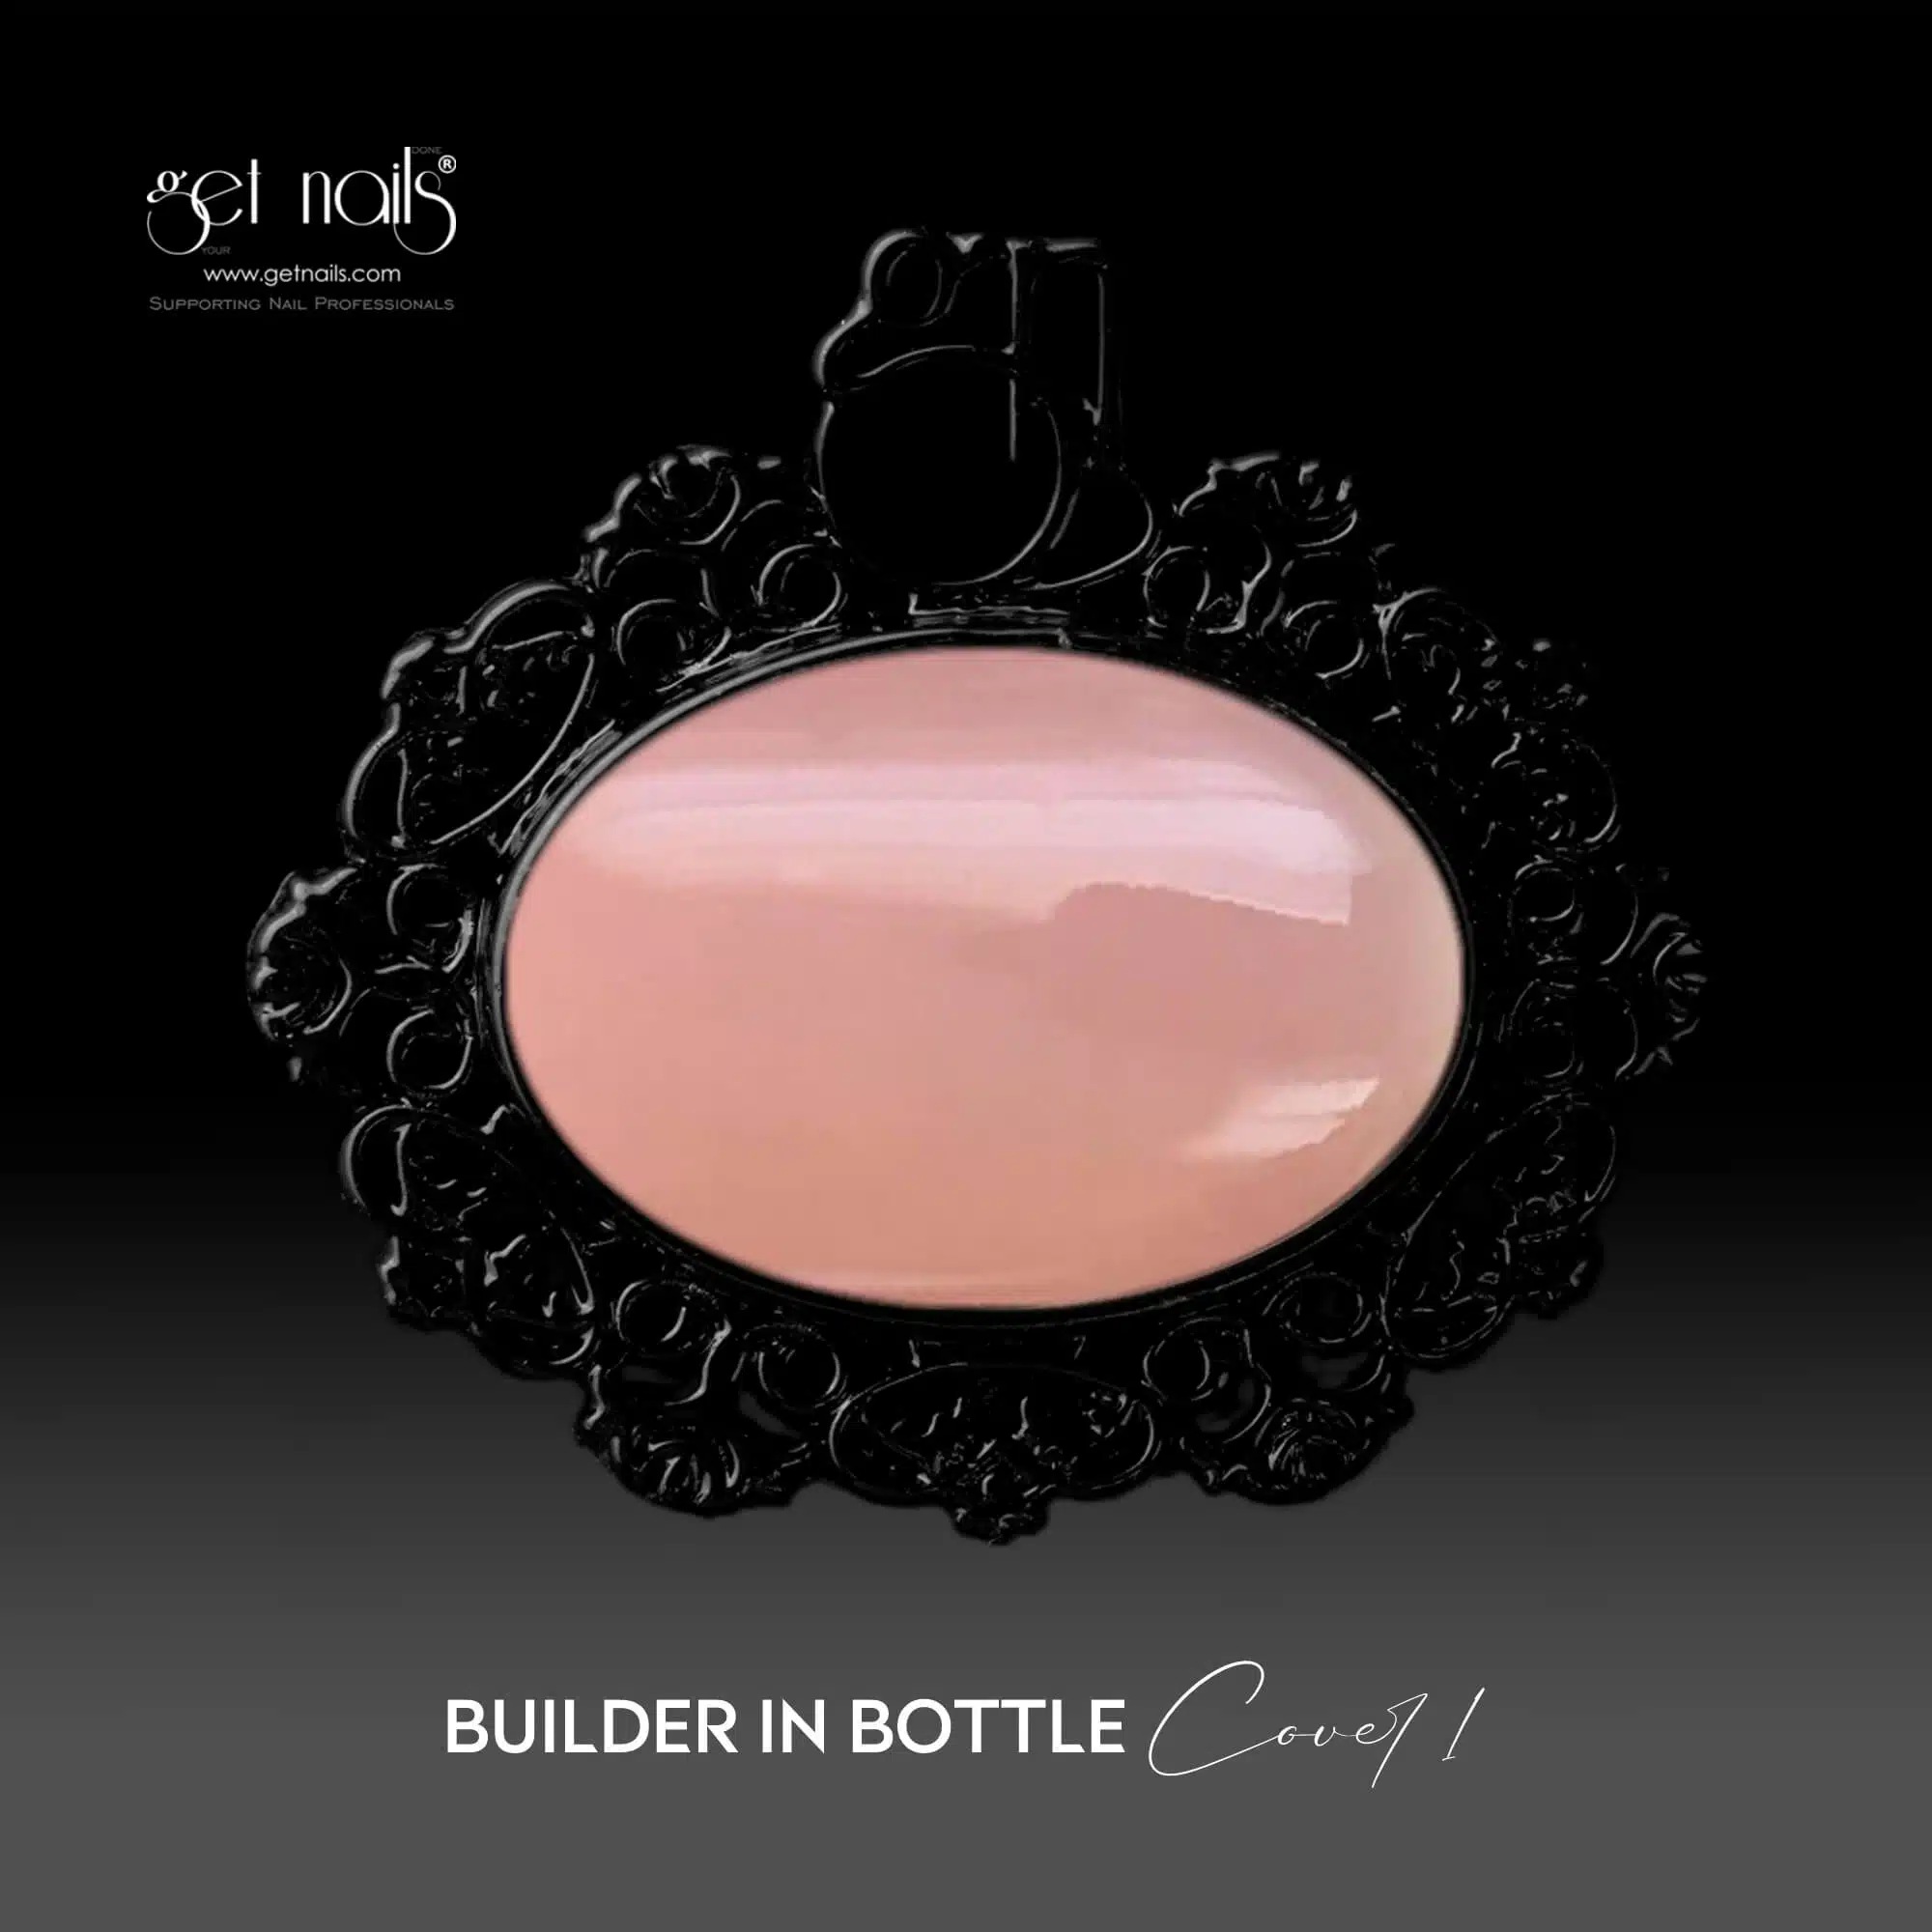 Get Nails Austria - Builder in Bottle Cover 1 15г